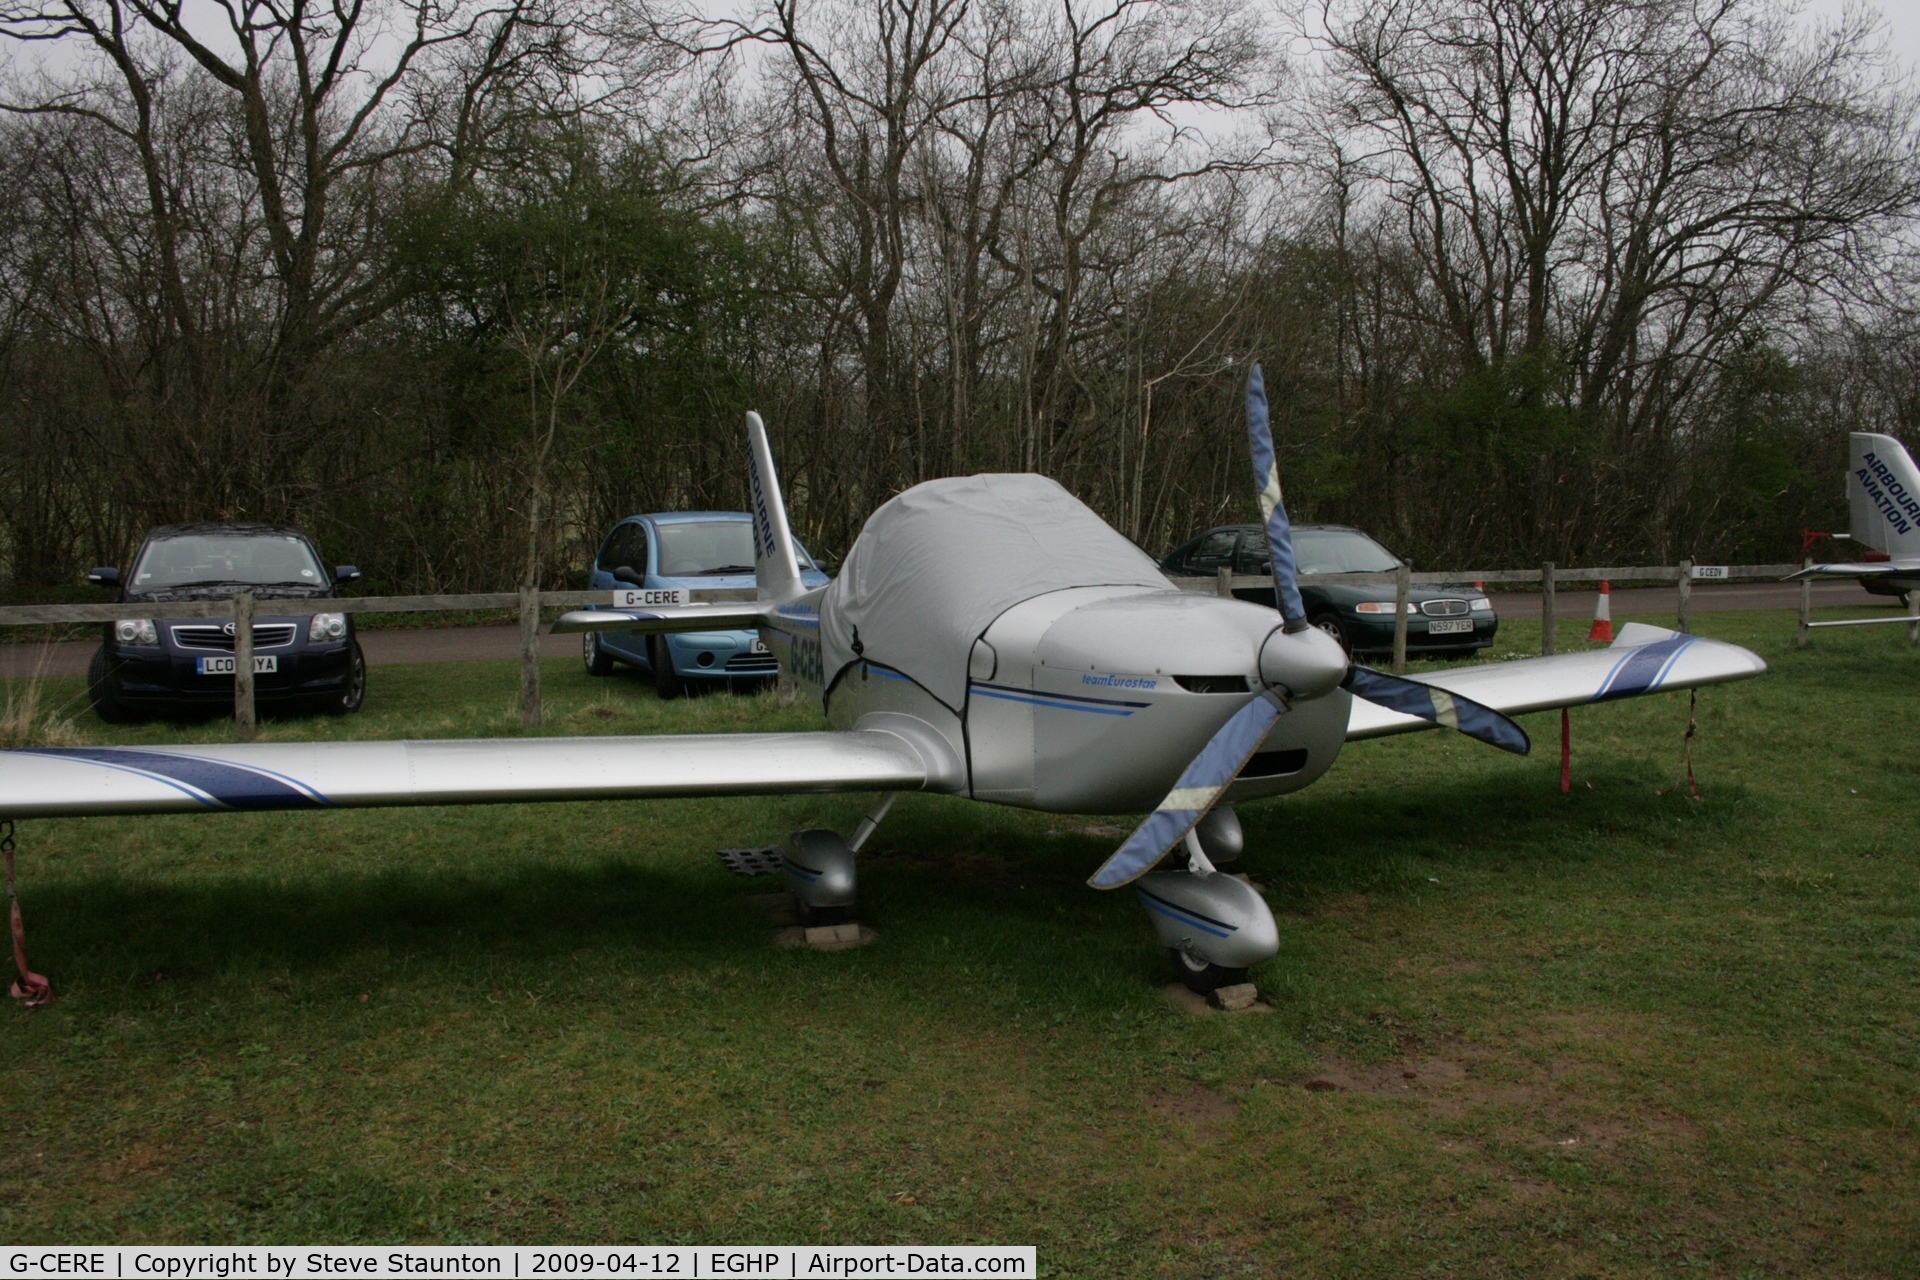 G-CERE, 2007 Cosmik EV-97 TeamEurostar UK C/N 2931, Taken at Popham Airfield, England on a gloomy April Sunday (12/04/09)